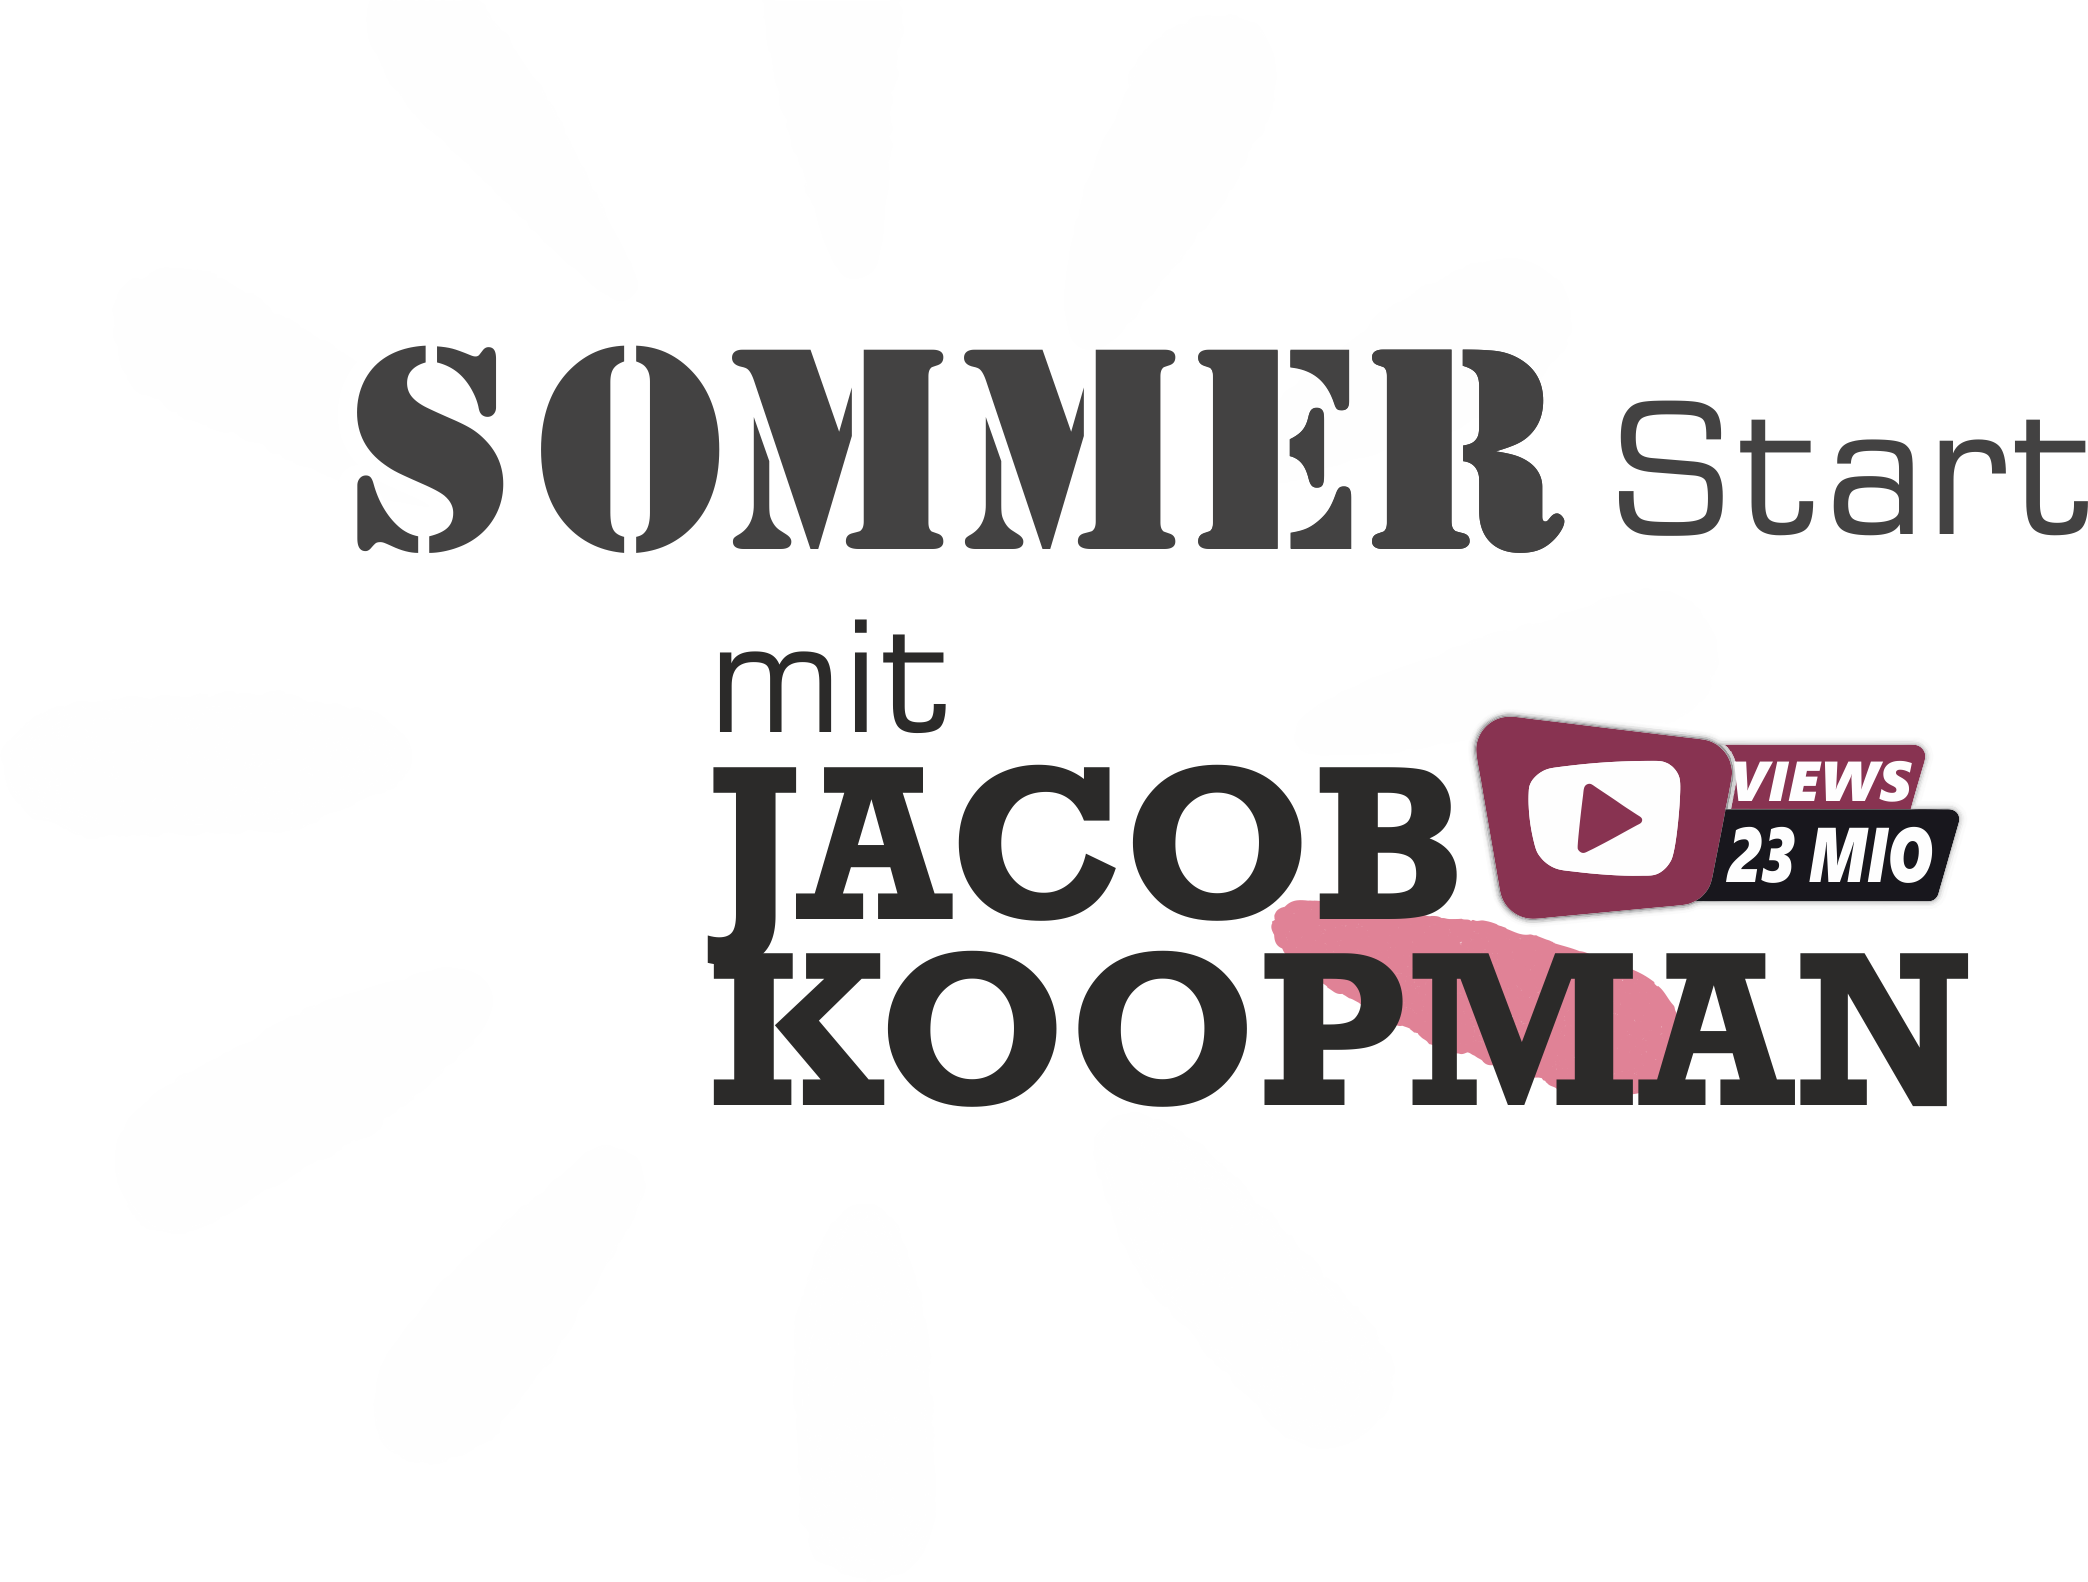 SOMMERSTART mit JACOB KOOPMAN live in SILLIAN